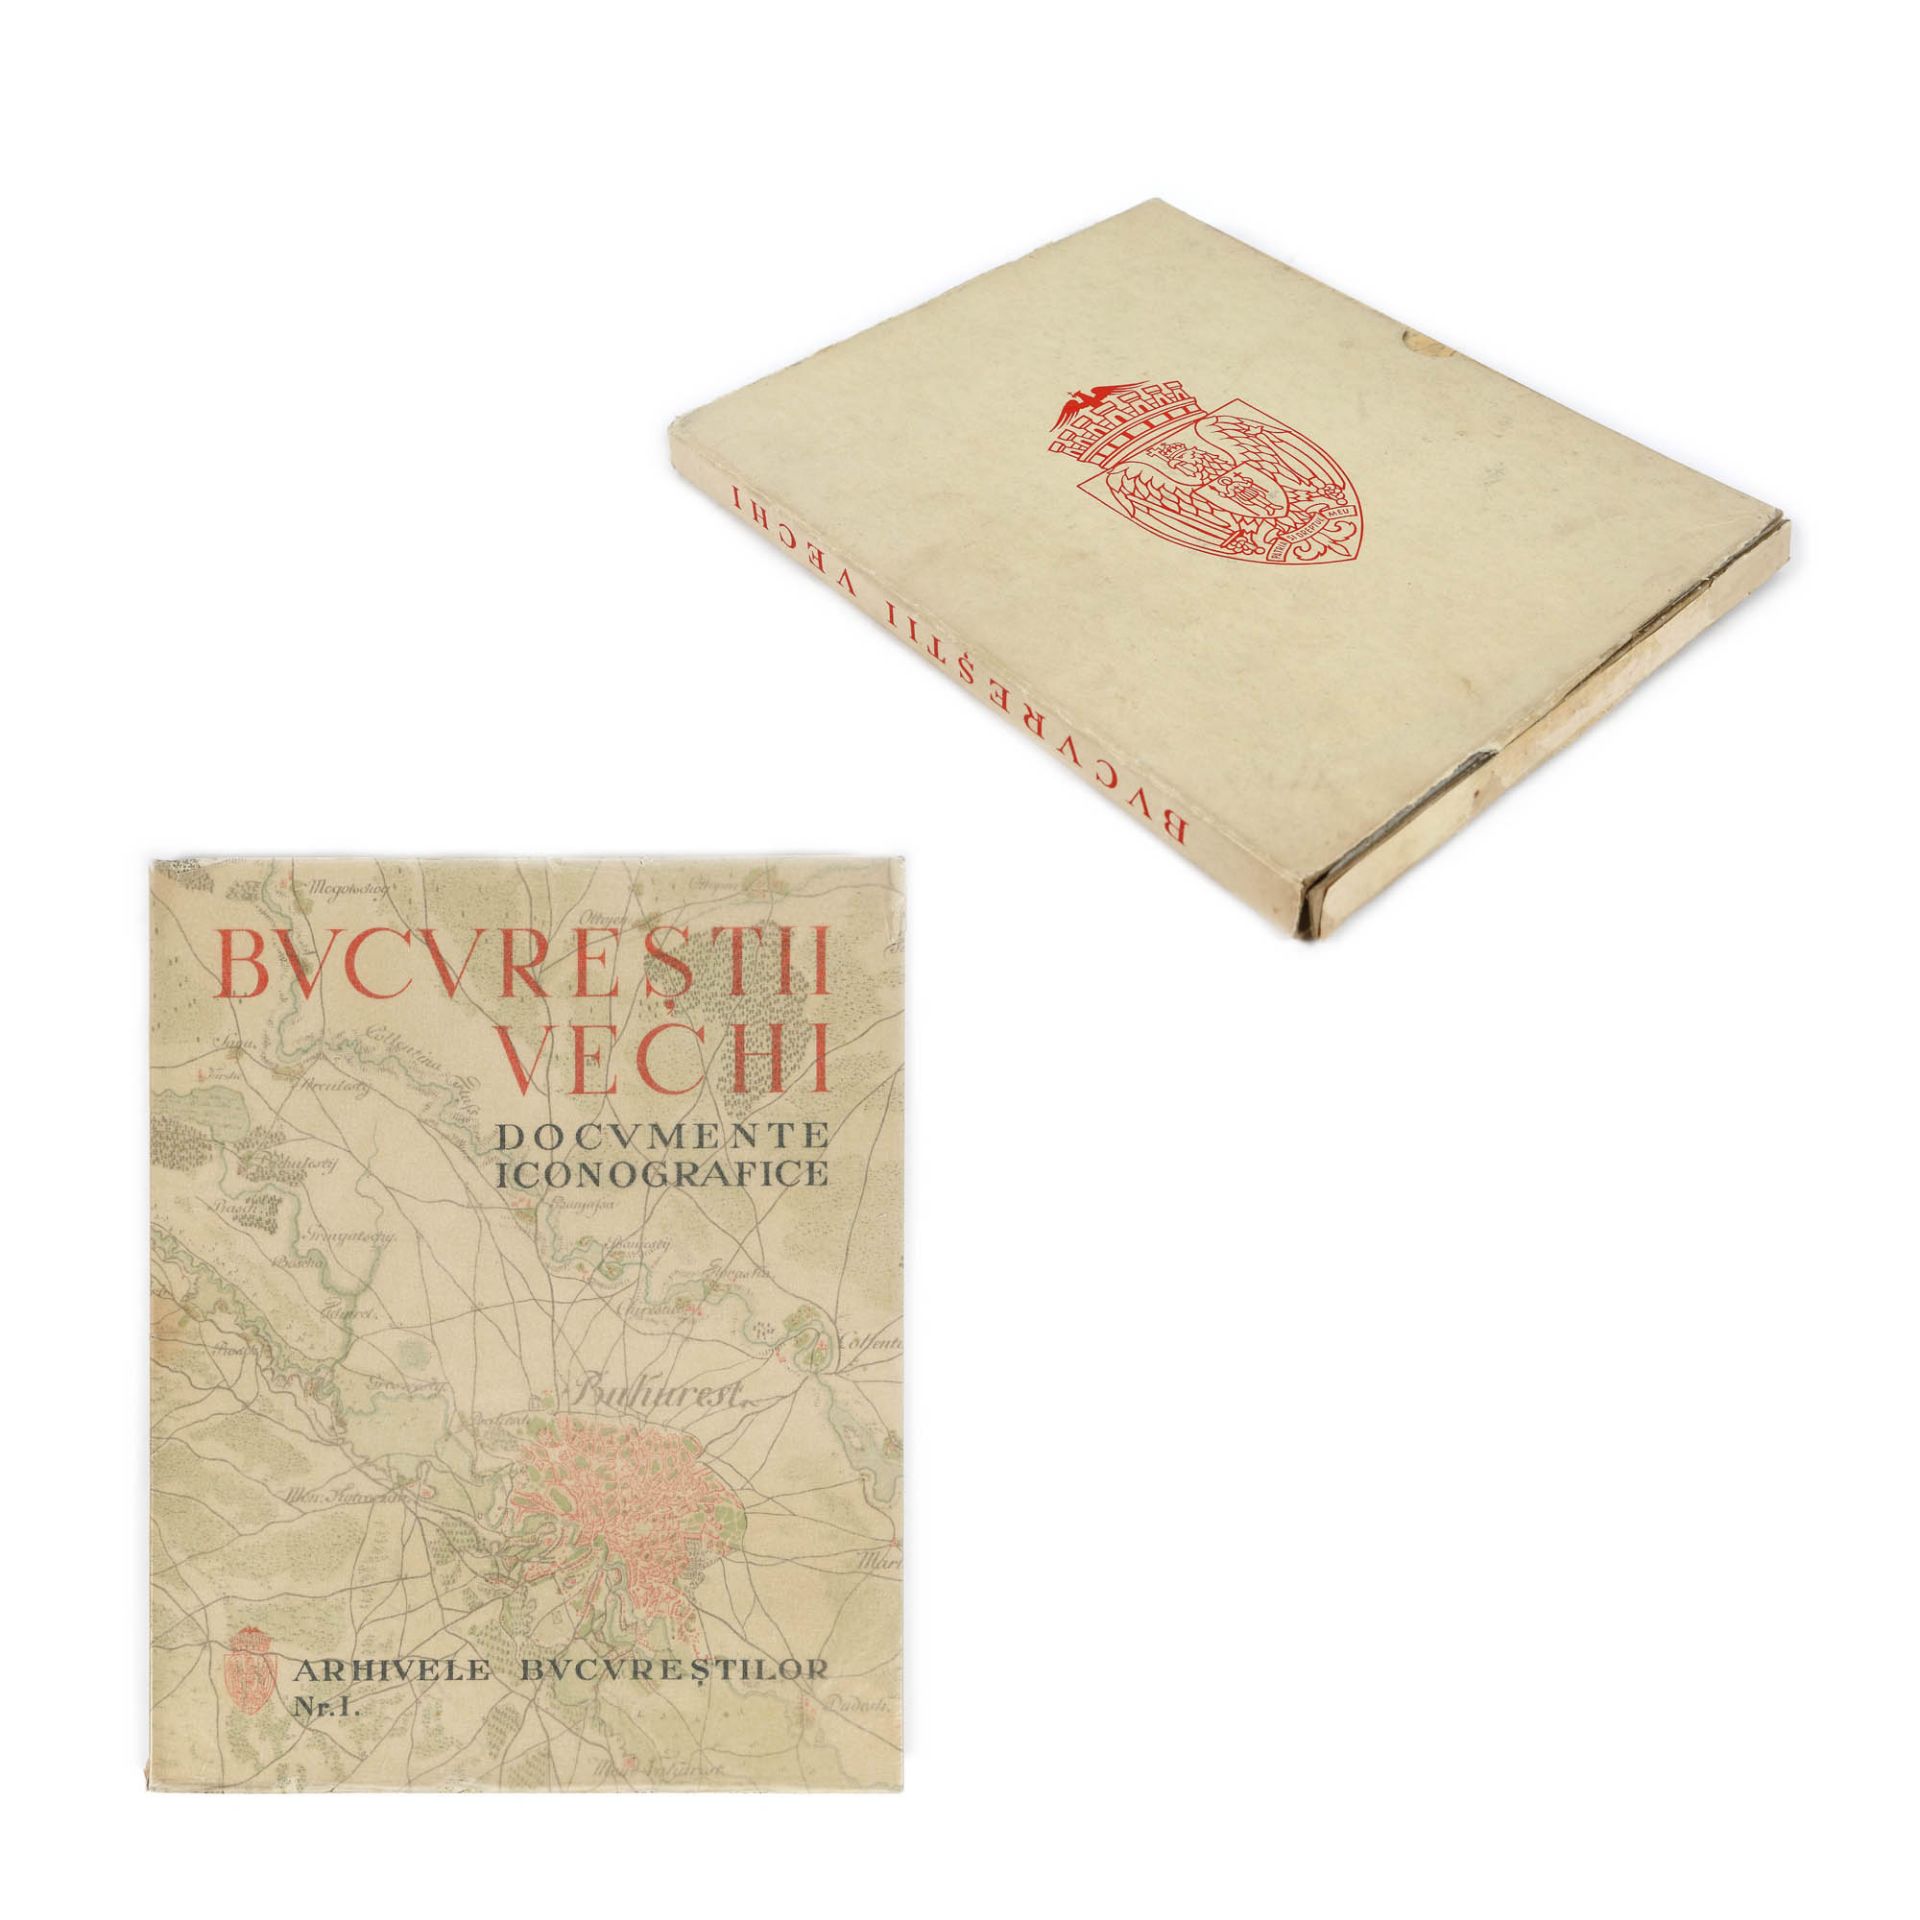 "Bucureștii vechi - documente iconografice" ("Old Bucharest - iconographic documents"), by Adrian C